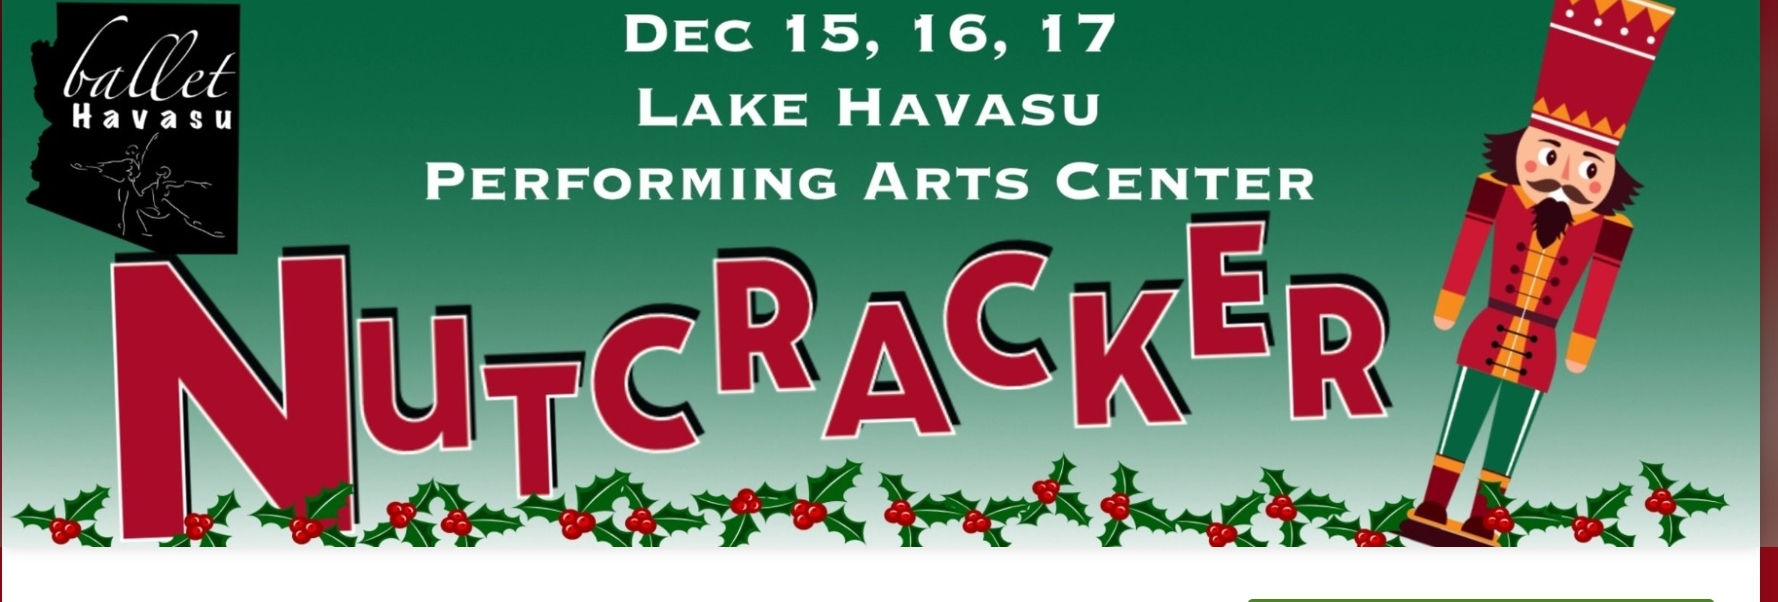 Lake Havasu Ballet Presents “The Nutcracker”